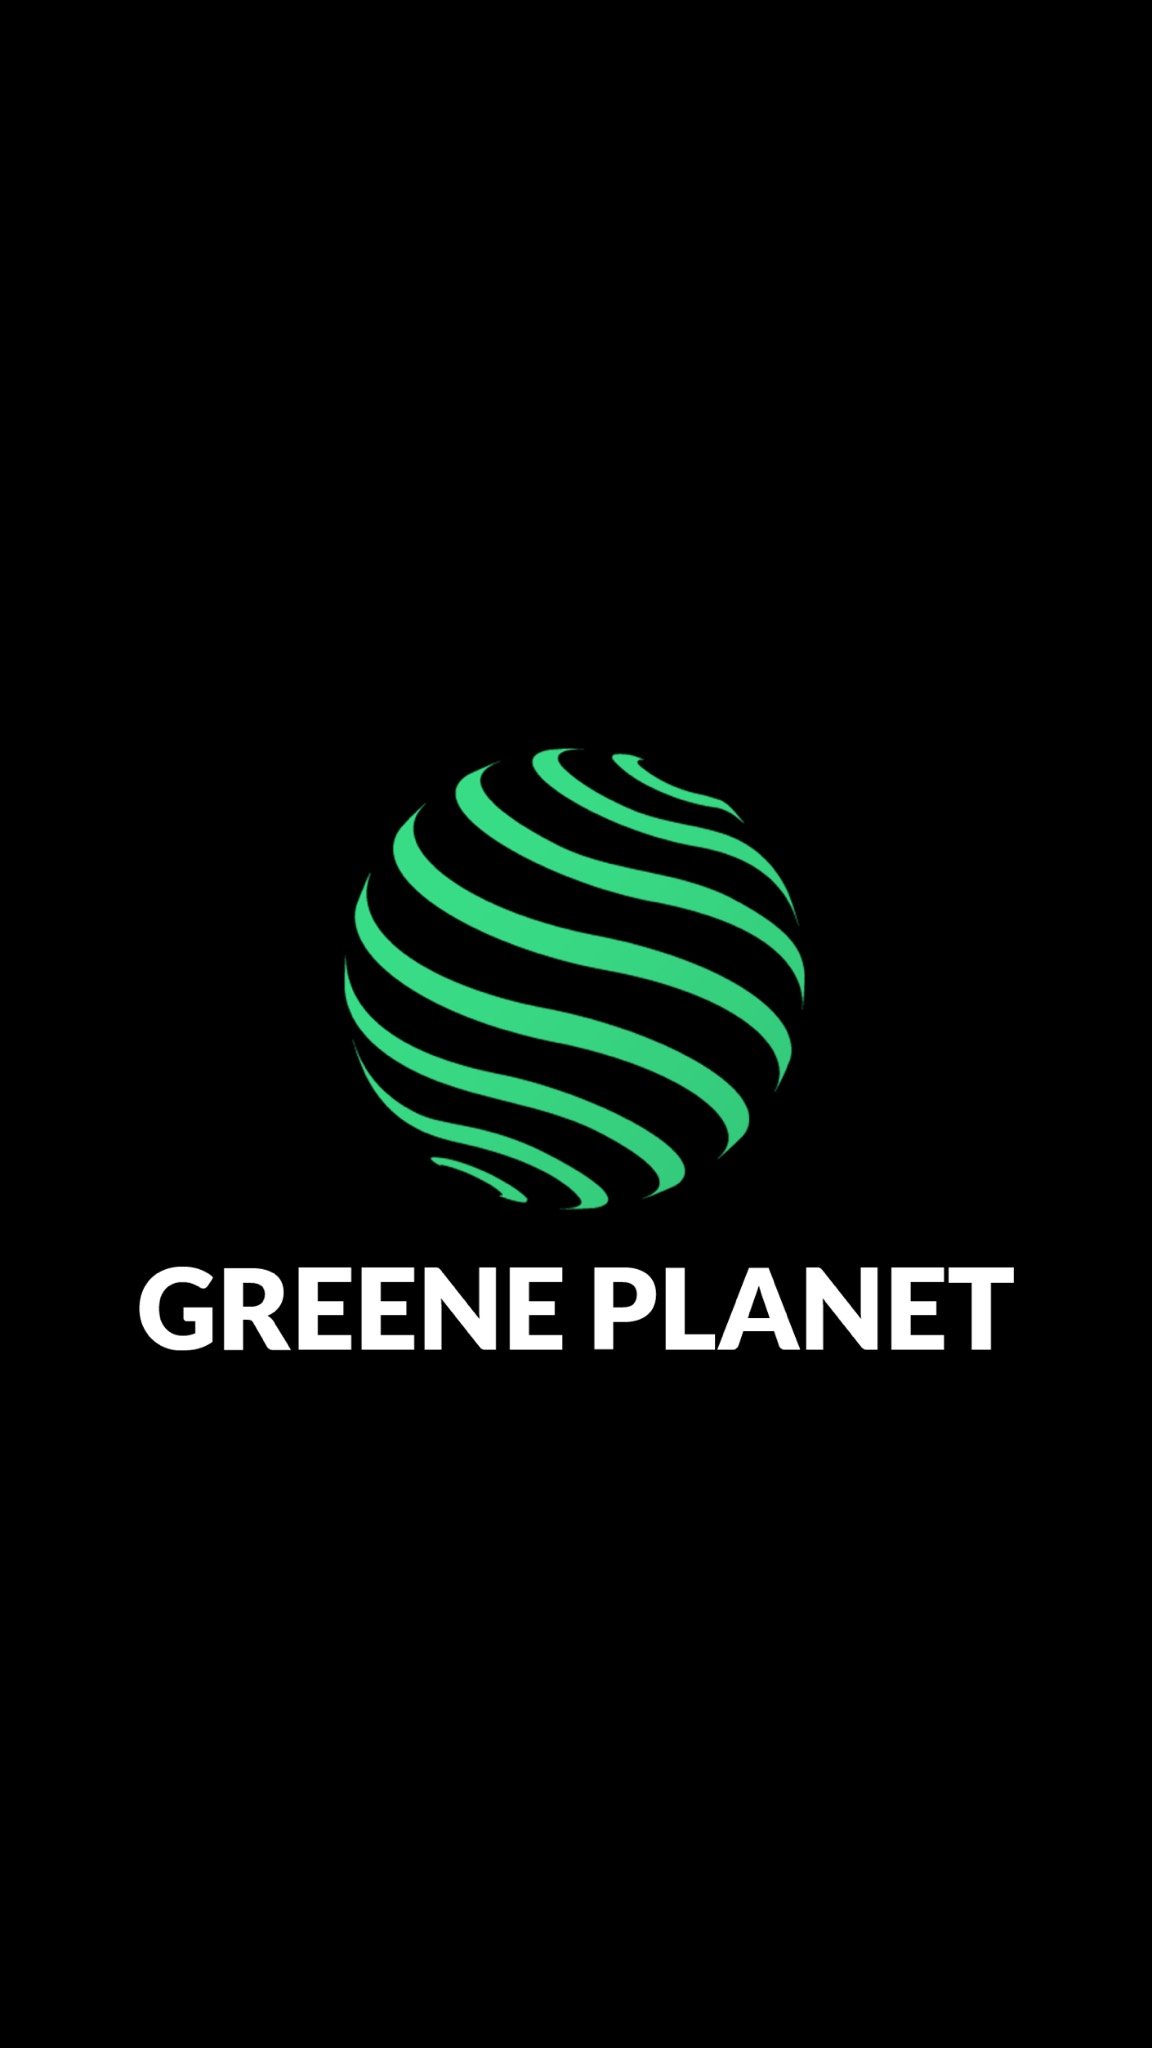 Greene Planet Mold Removal Logo